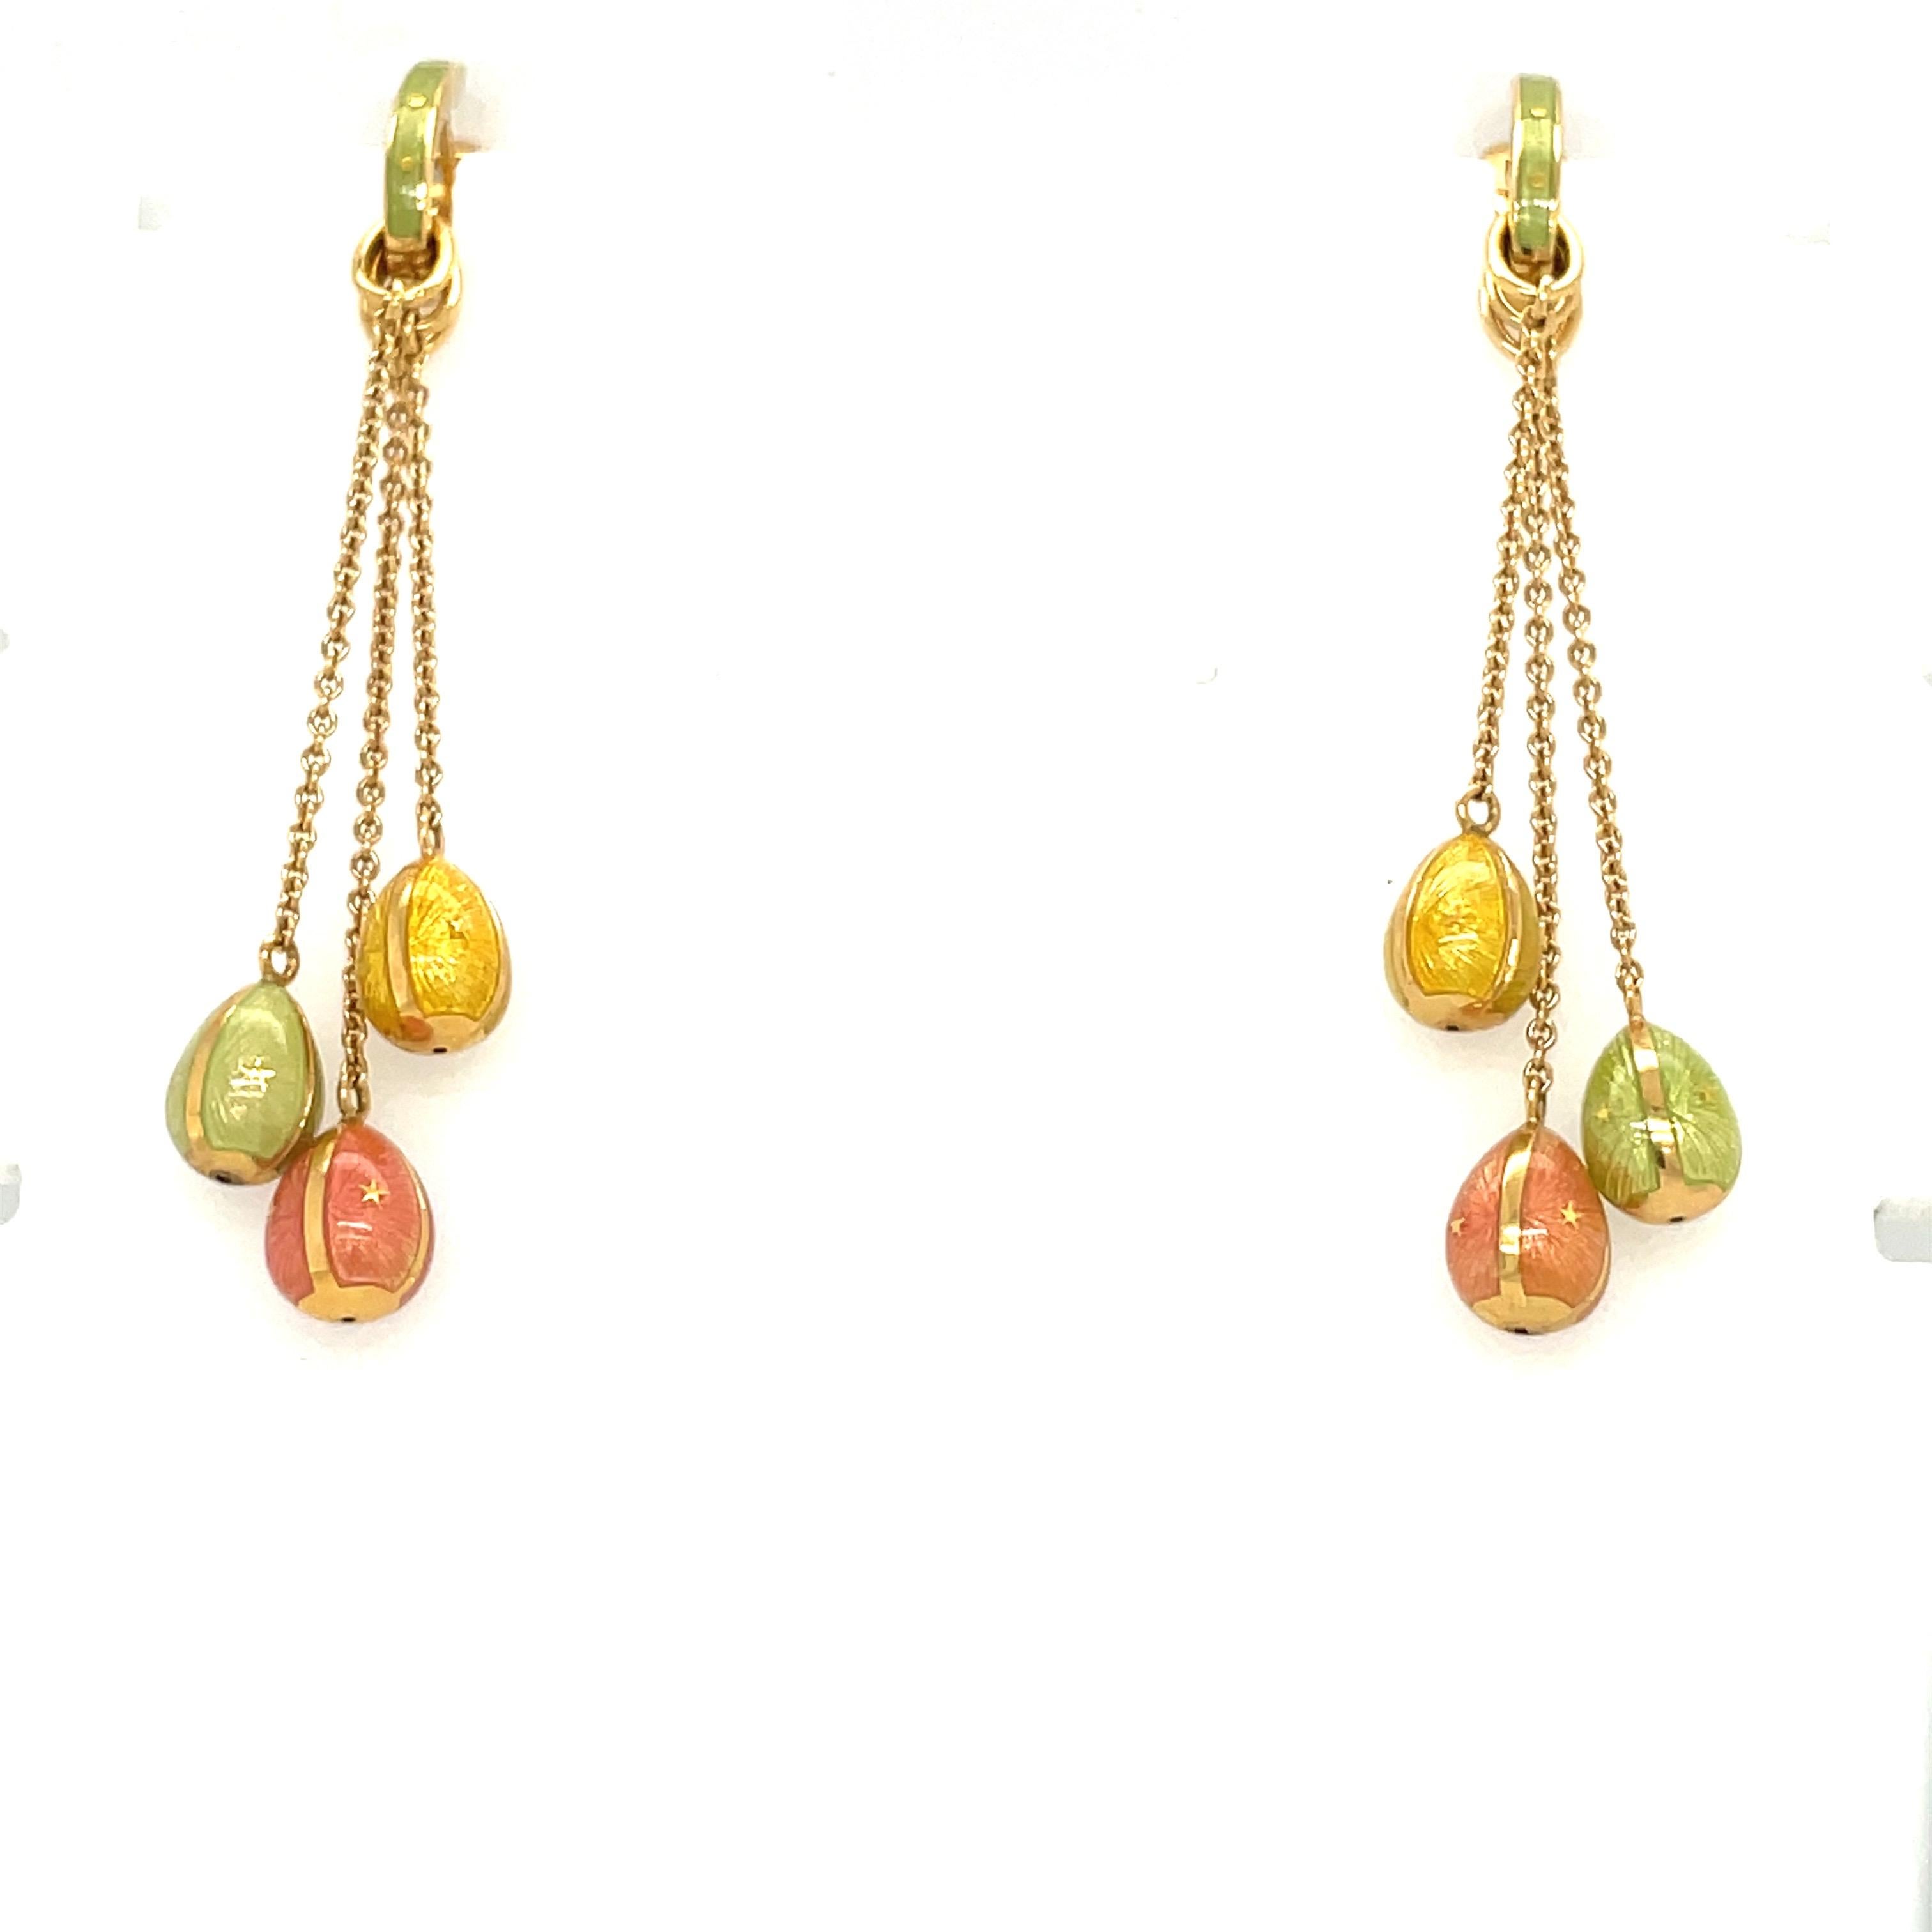 Faberge 18kt Yellow Gold & Peach, Green & Yellow Enamel Hanging Eggs Earrings 2